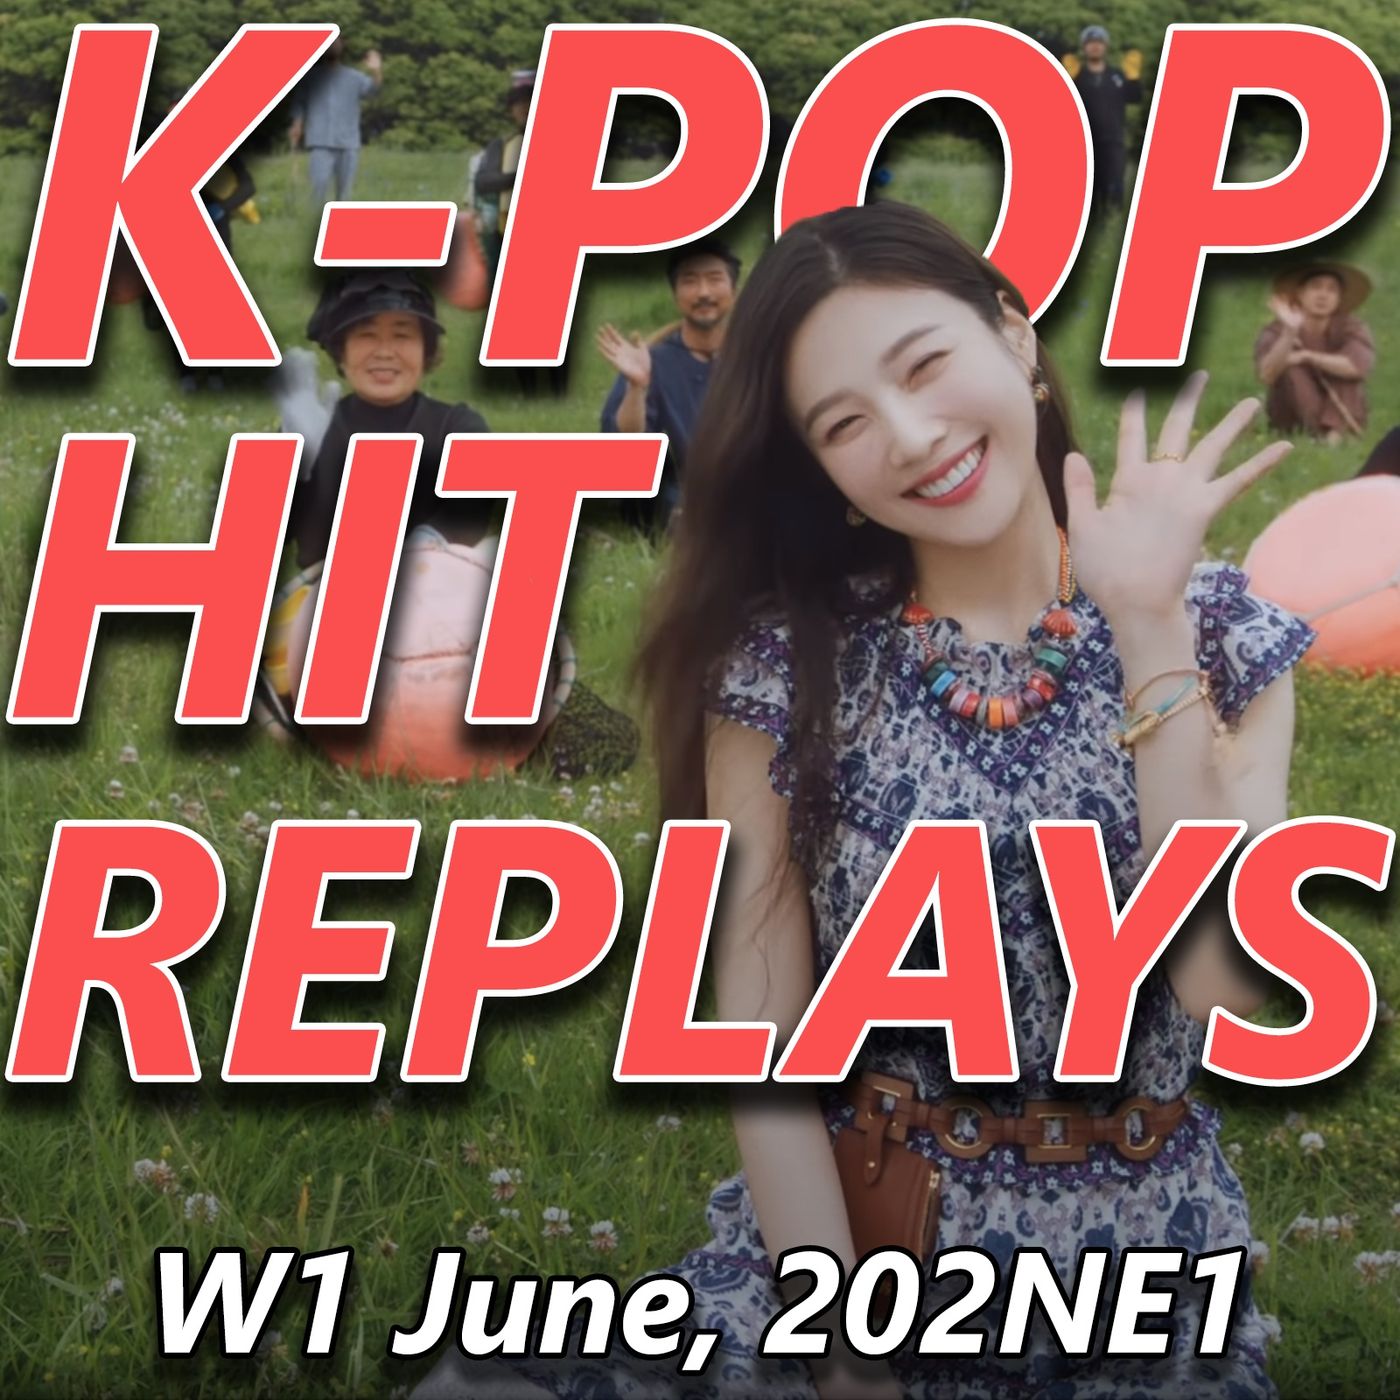 K-pop Music & News: B.I, EVERGLOW, NCT 127, Joy - W1 June 202NE1